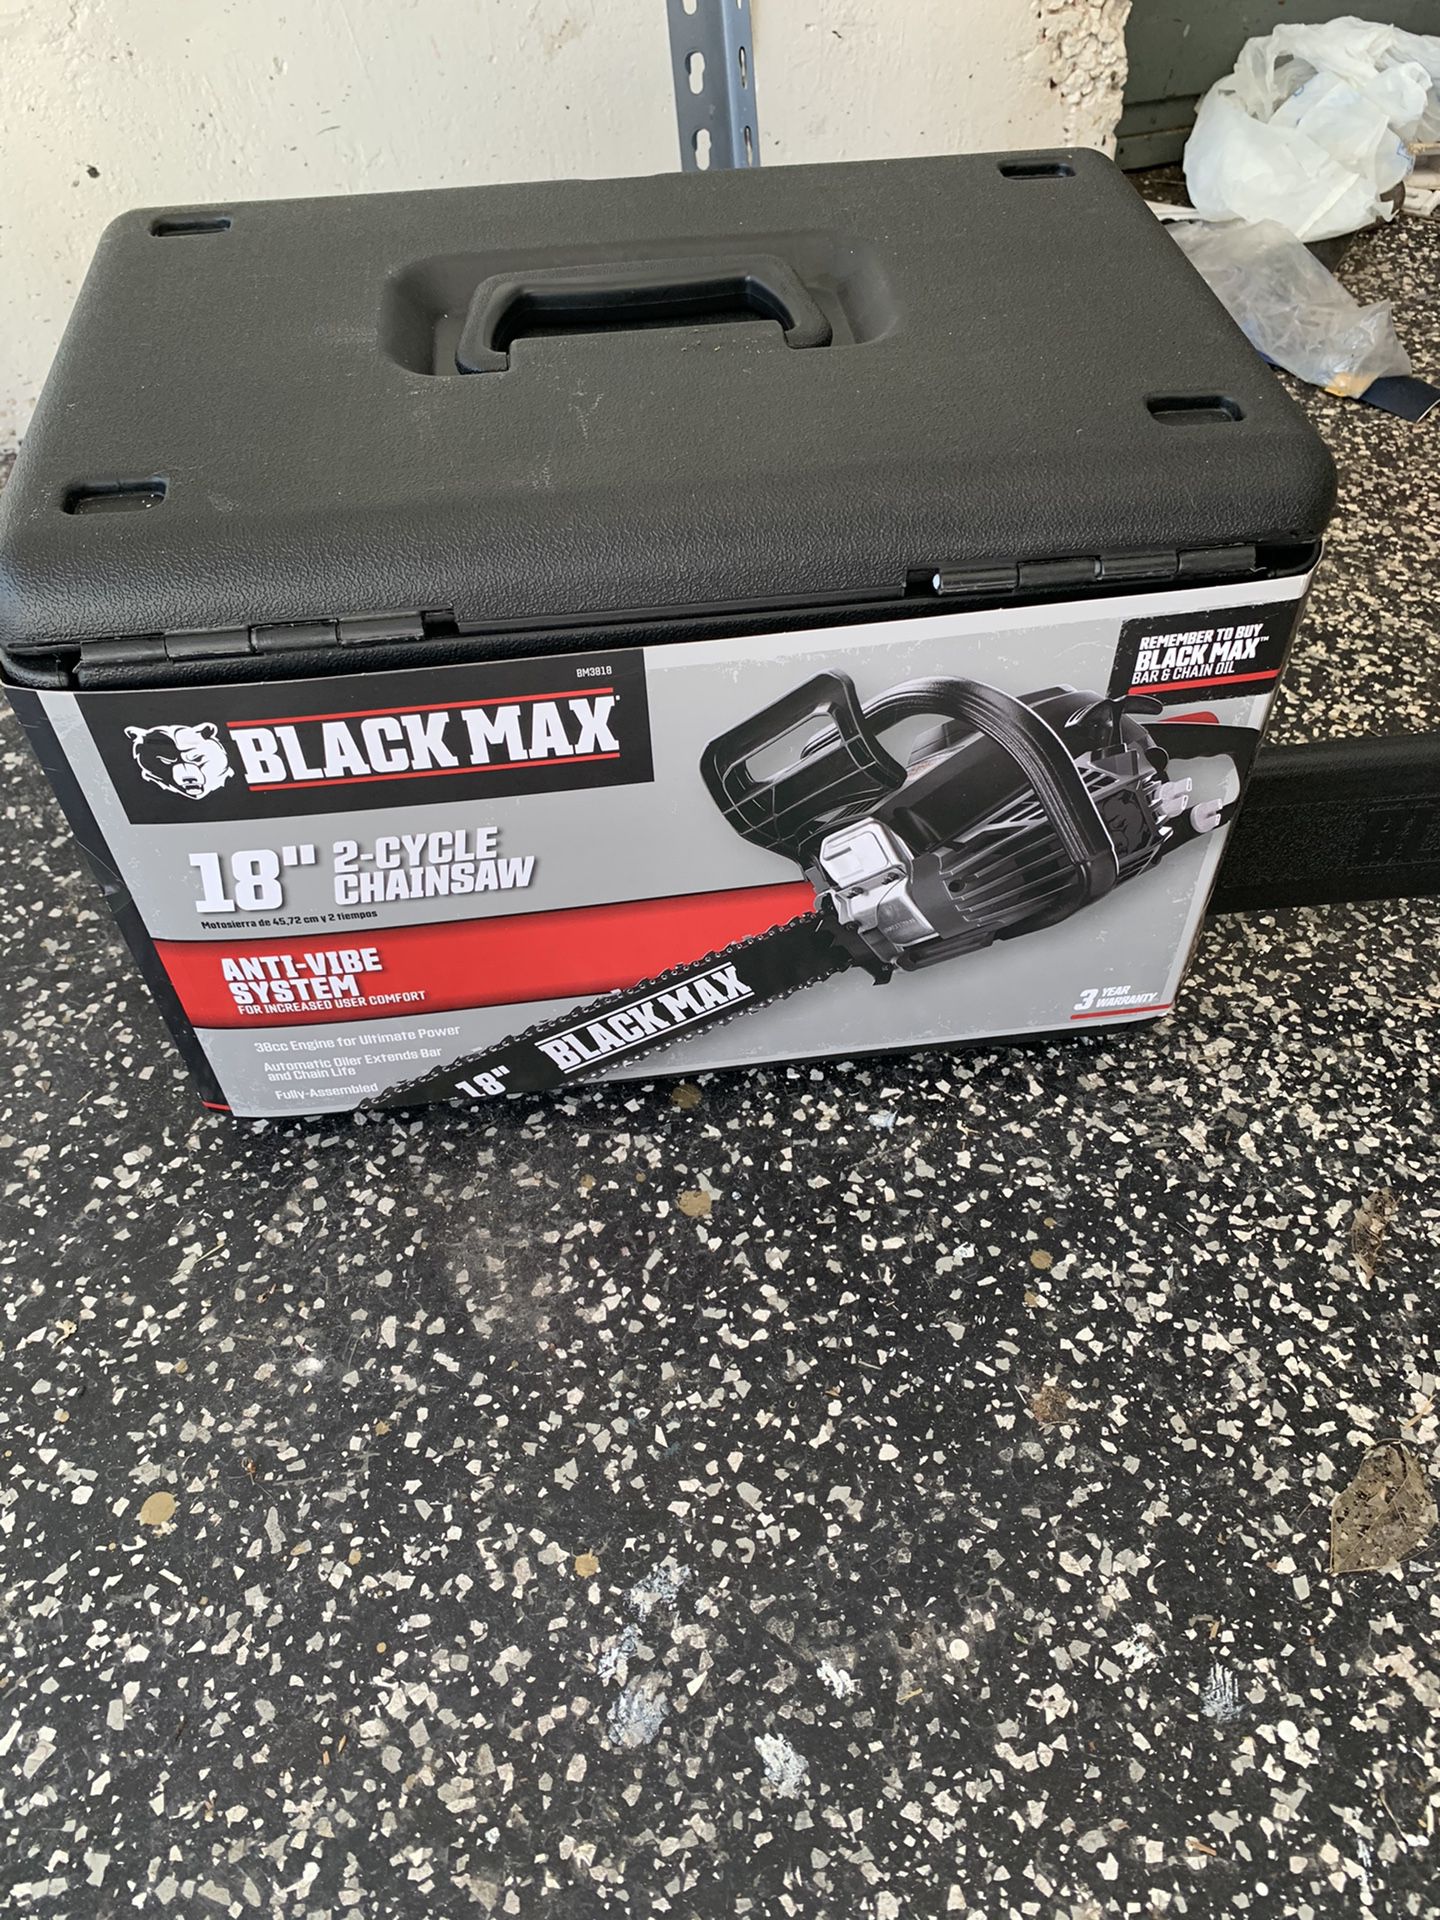 Black max 2 cycle chainsaw